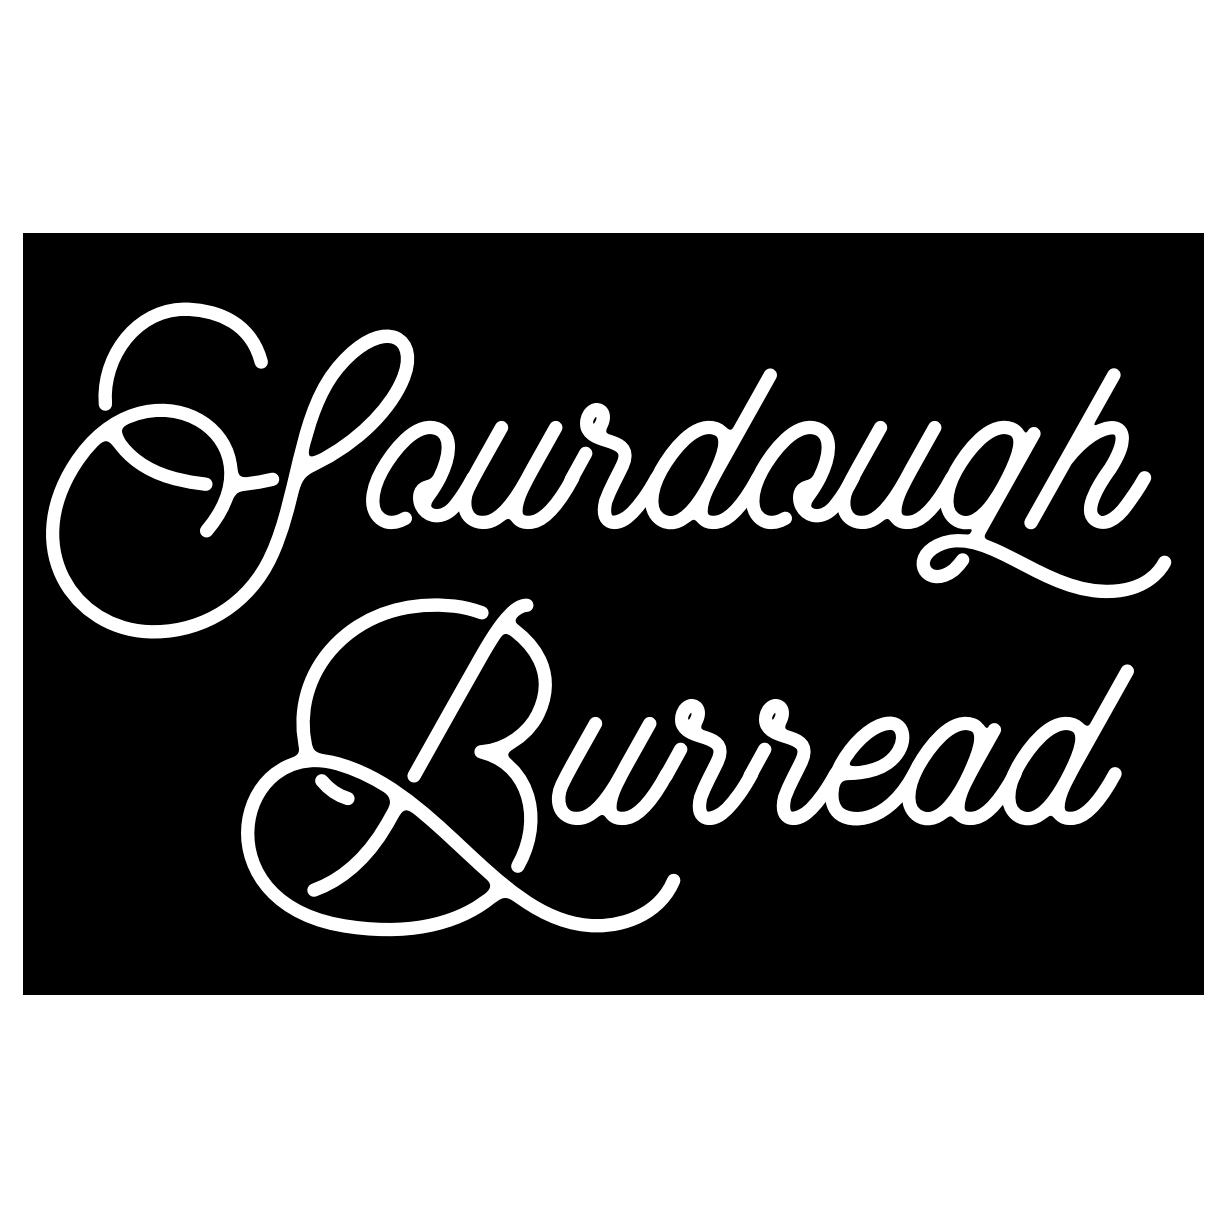 Sourdough Burread